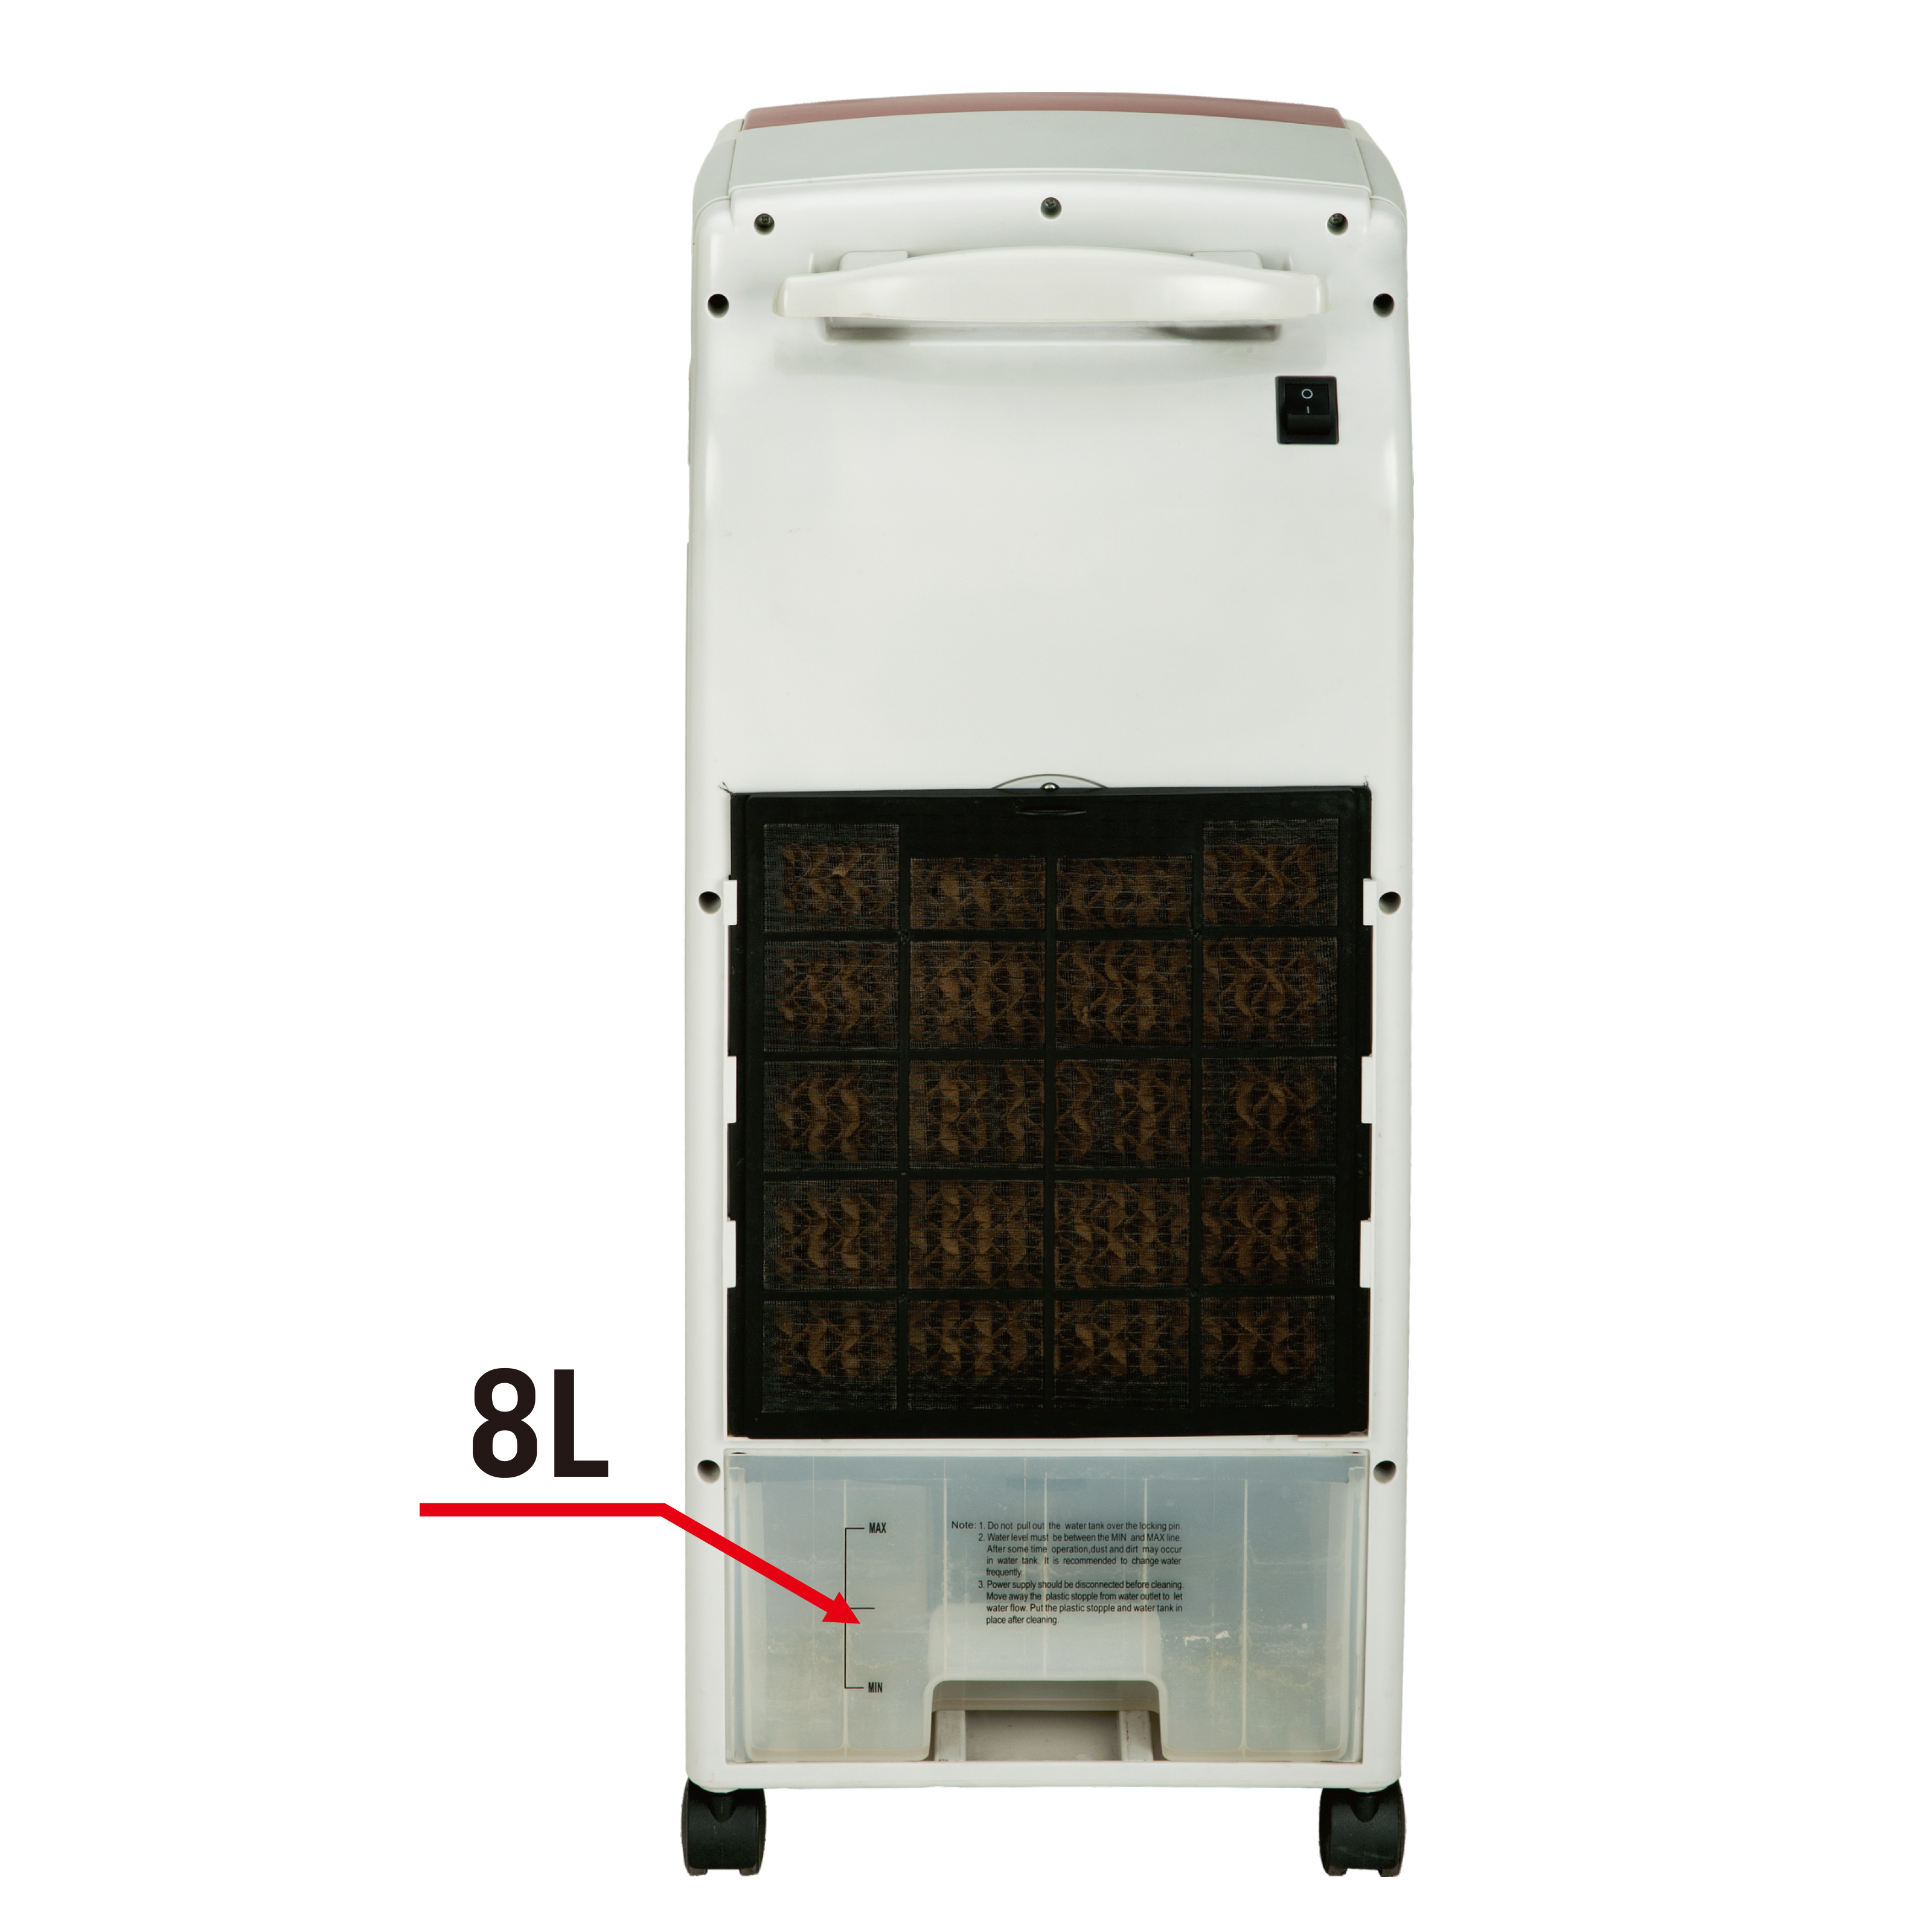  Enfriador de aire de evaporador para el hogar conveniente e innovador para interiores 40L